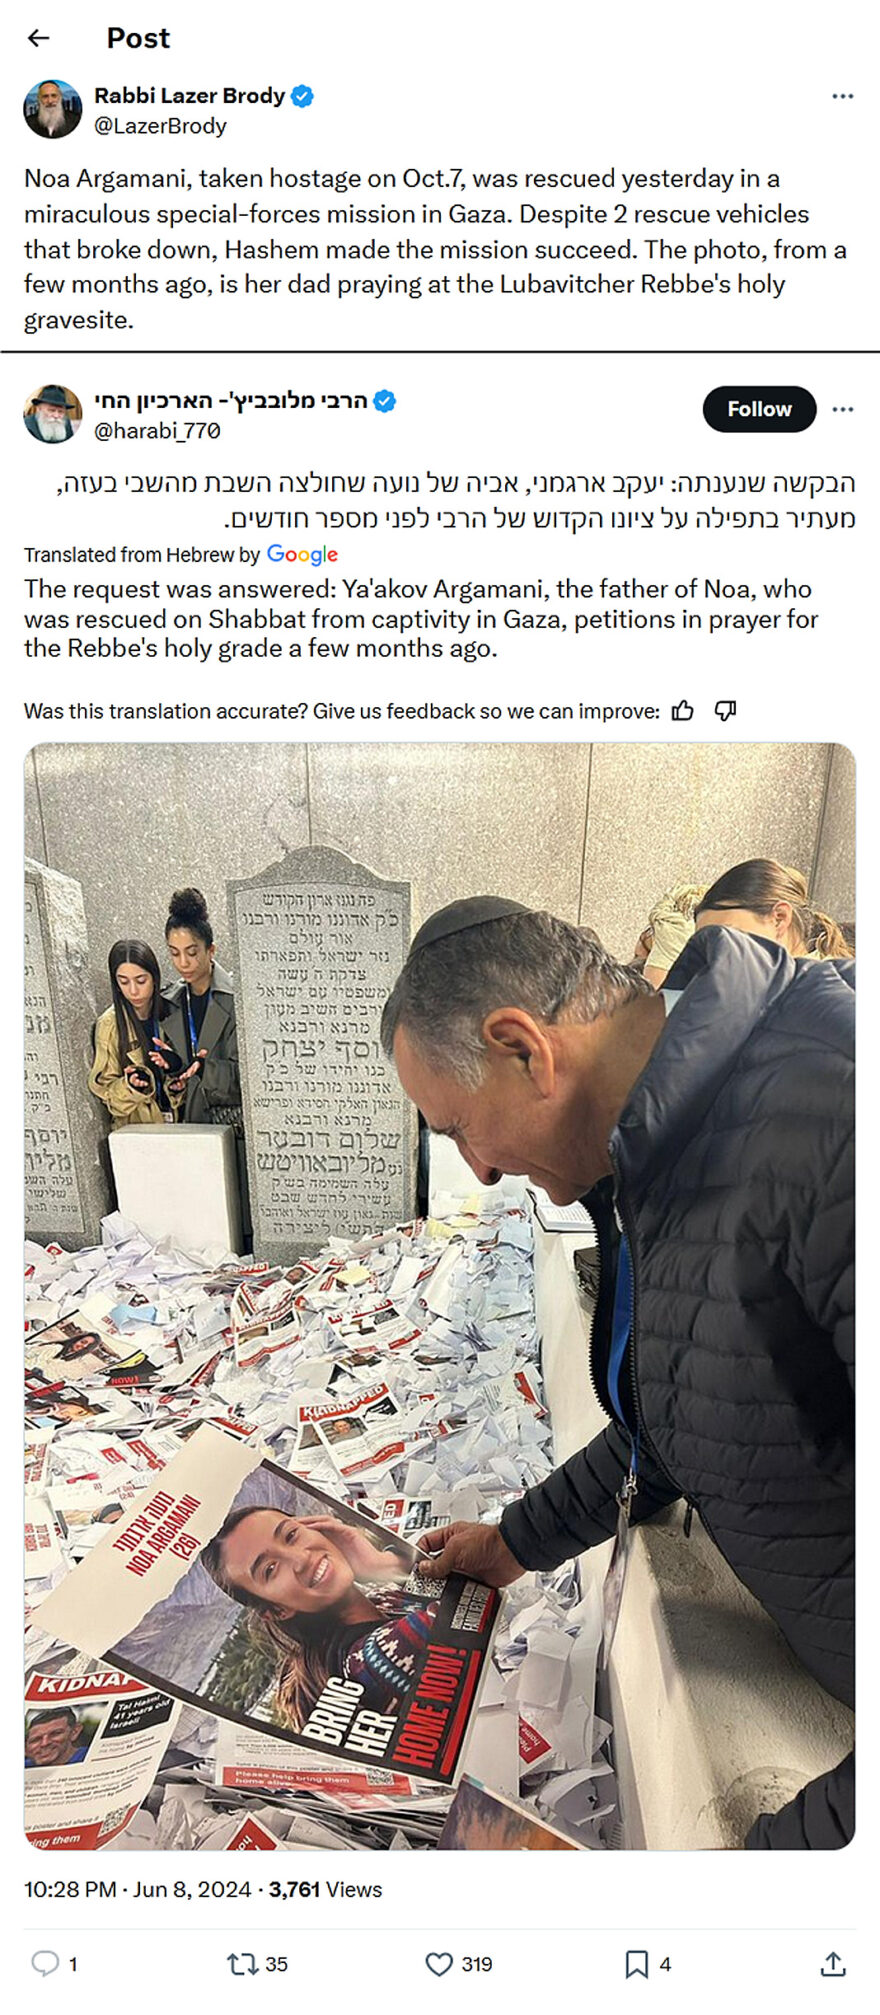 Rabbi Lazer Brody-tweet-9June2024-Noa Argamani's dad praying at the Lubavitcher Rebbe's holy gravesite